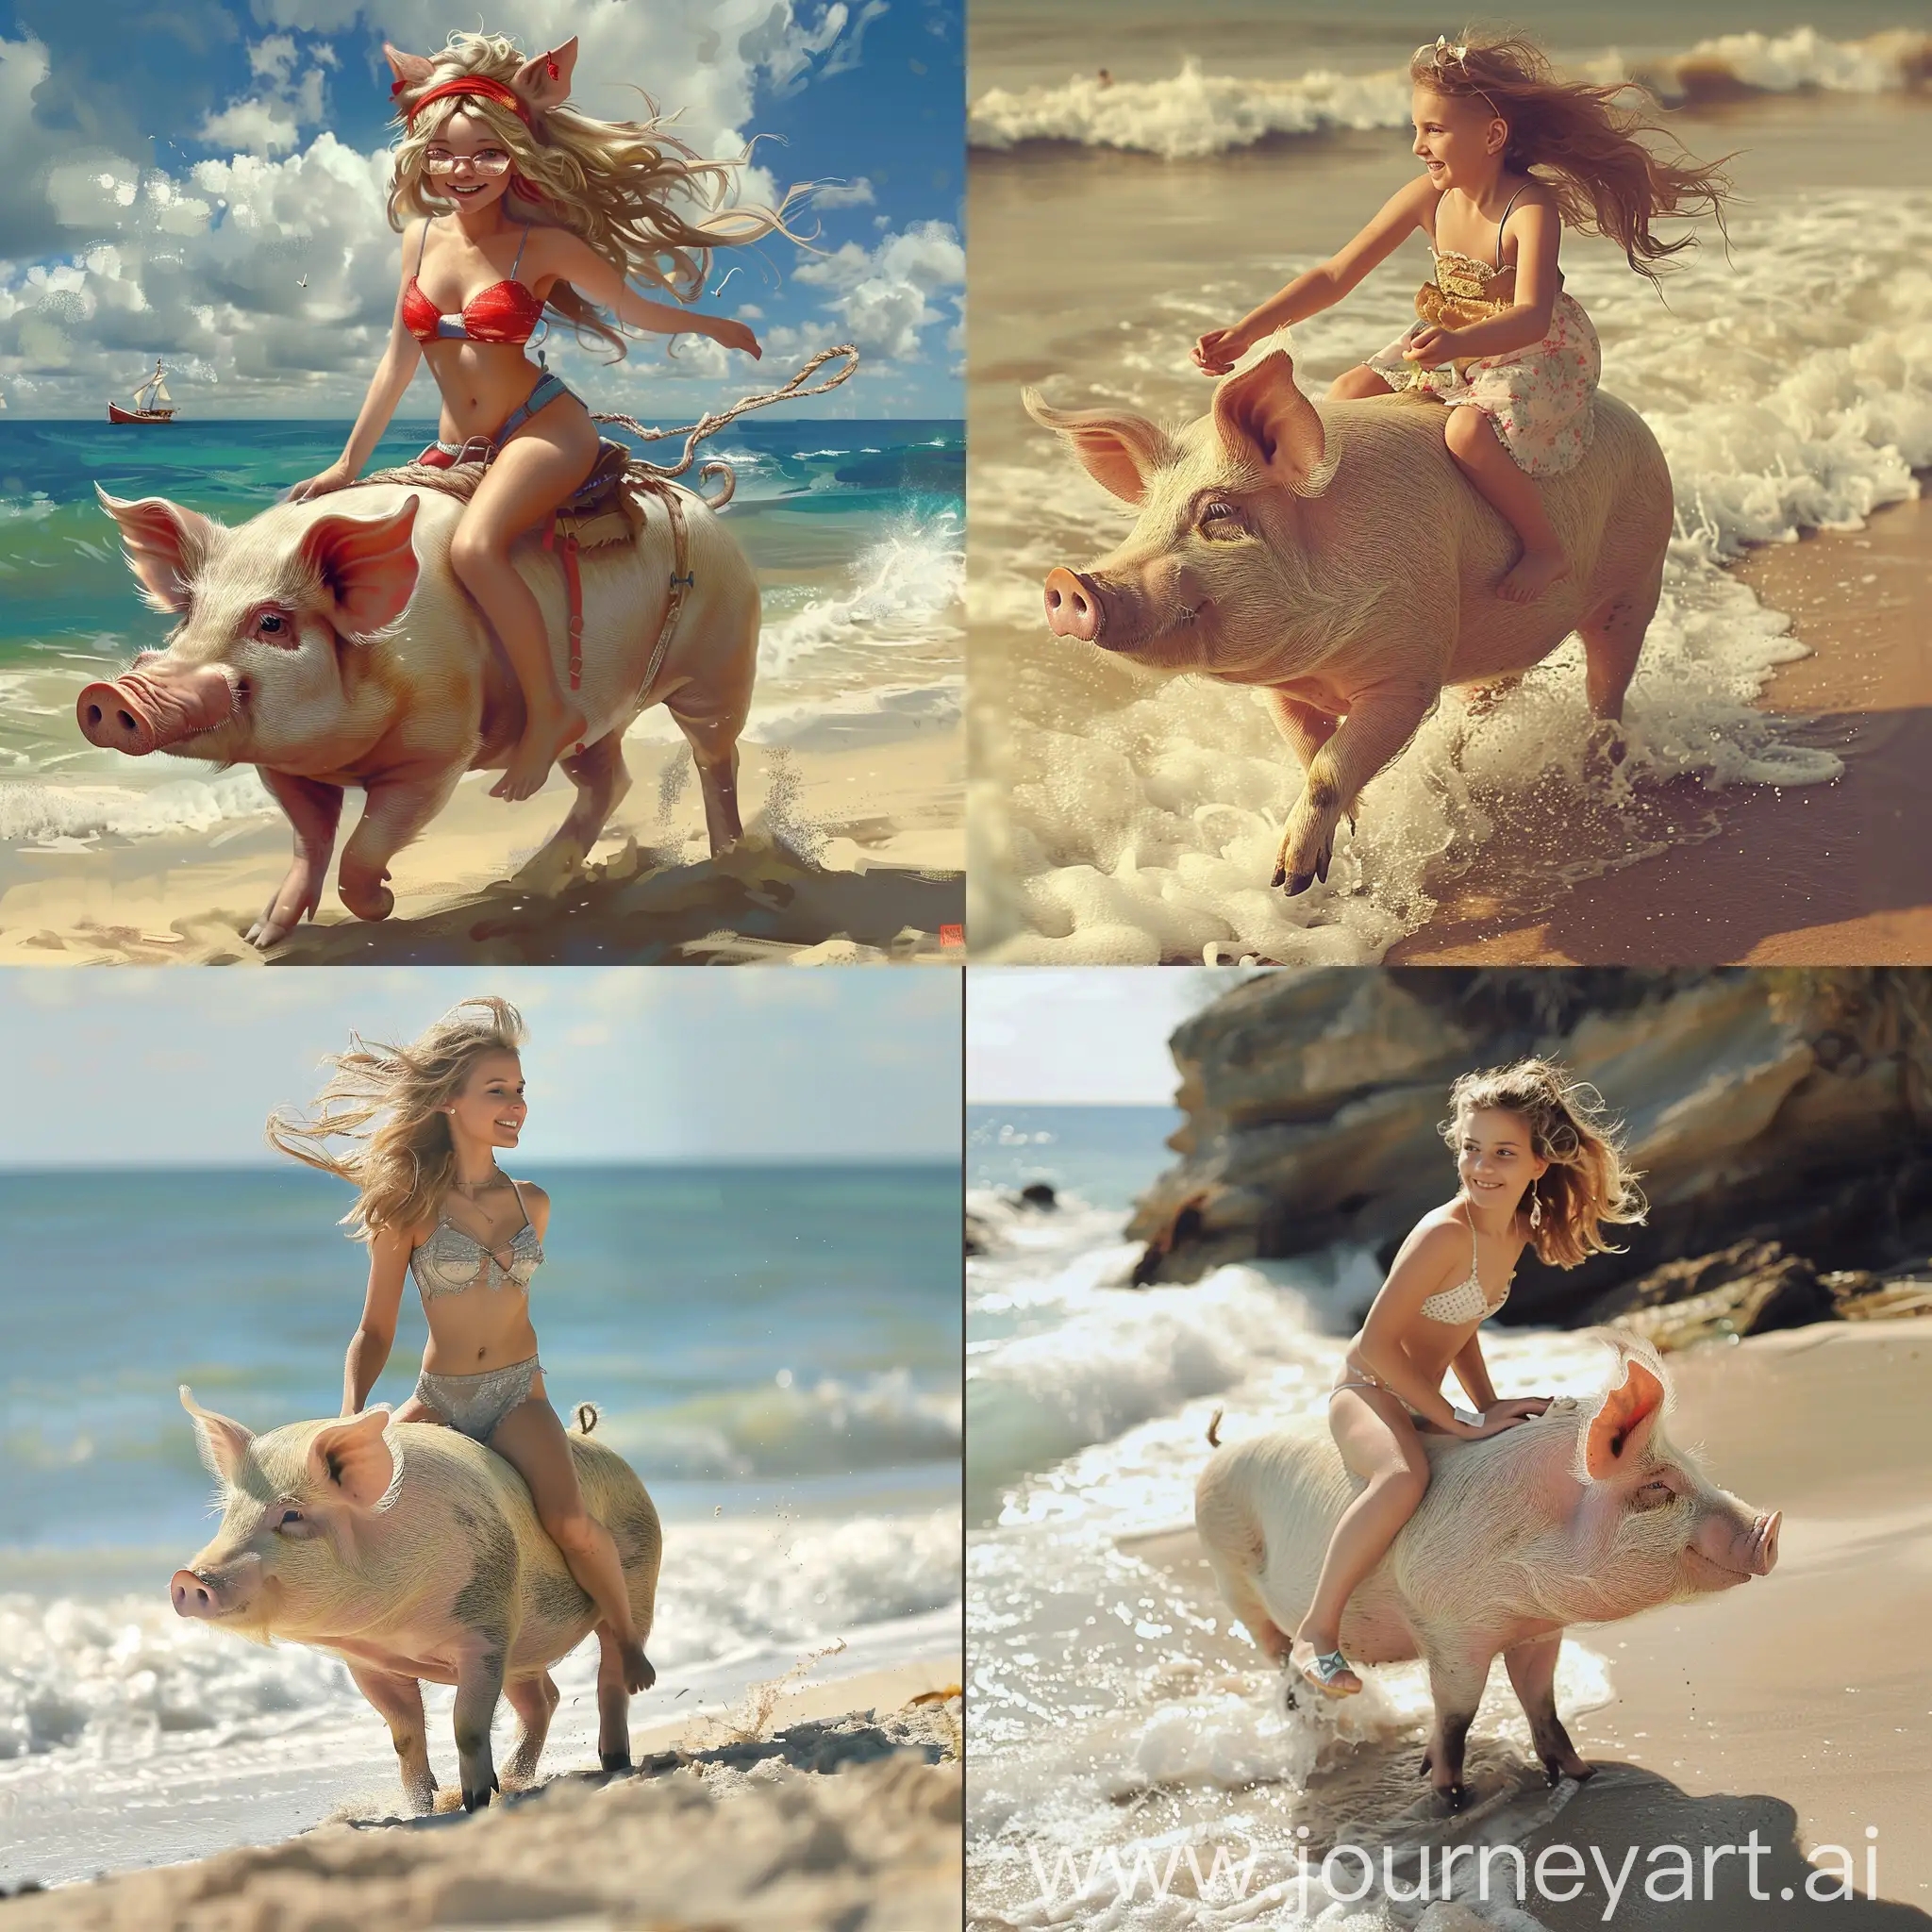 Glamorous-Woman-Riding-Pig-Along-Seaside-Shoreline